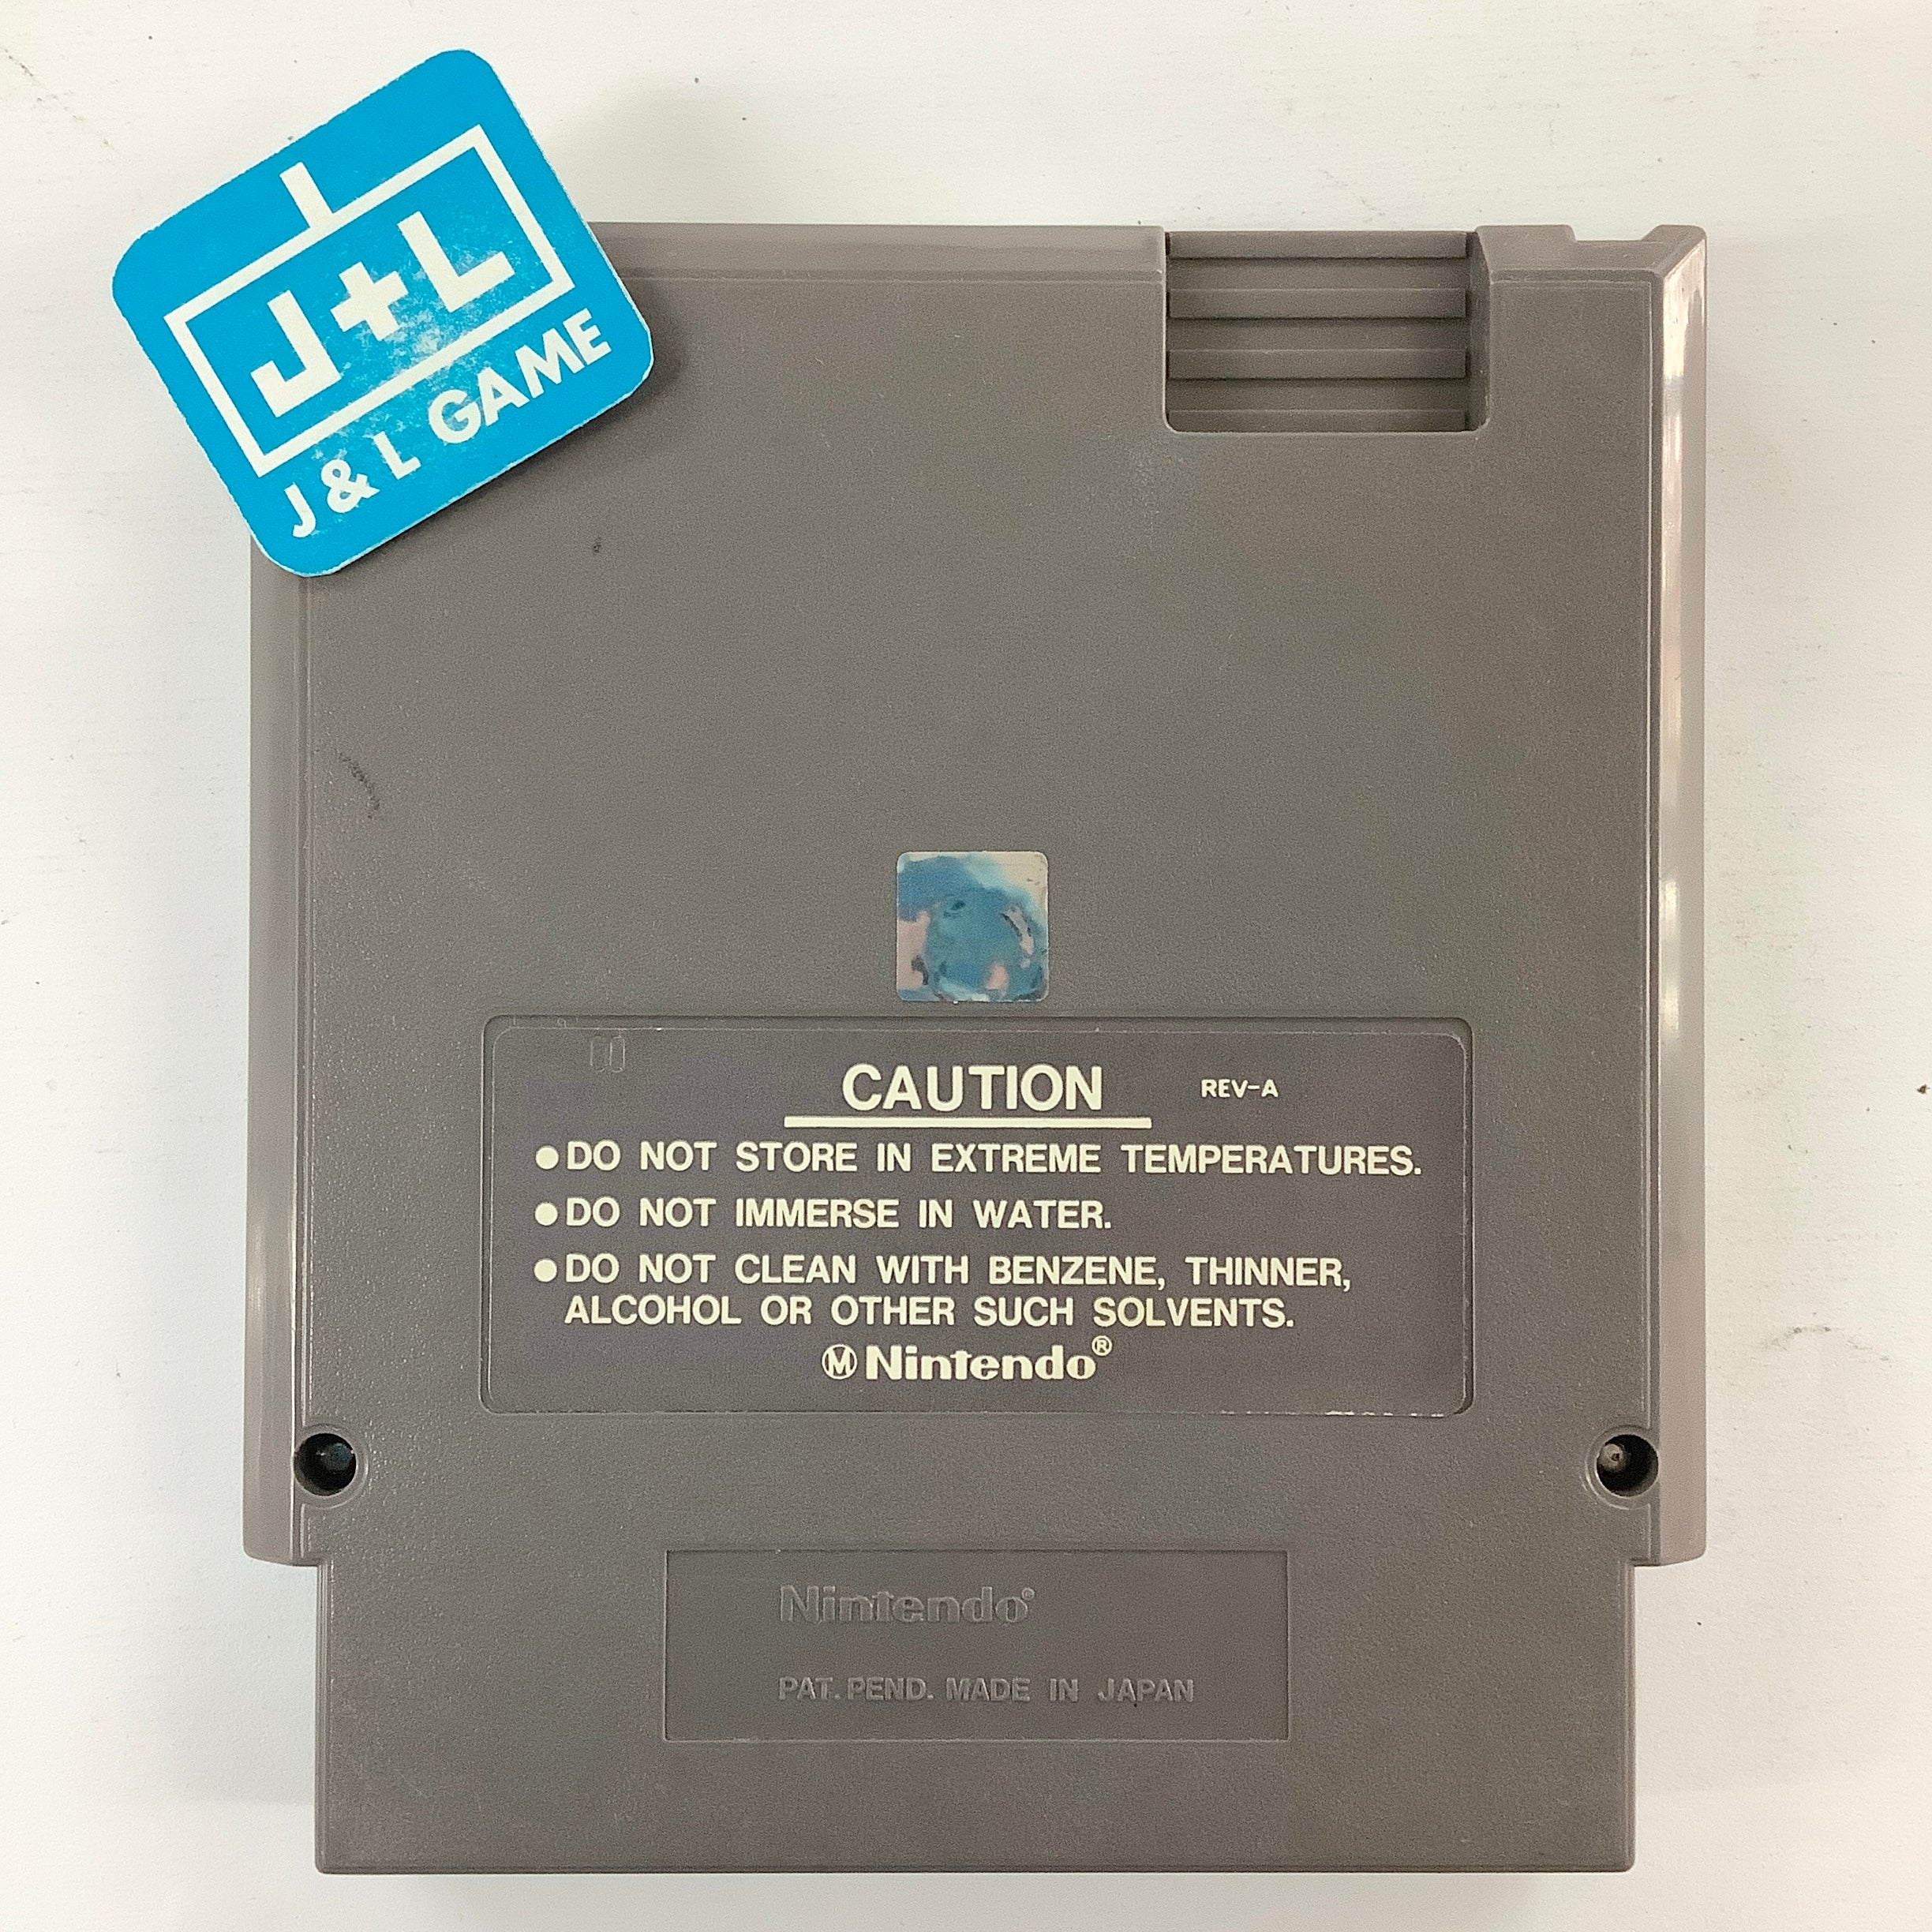 Track & Field - (NES) Nintendo Entertainment System [Pre-Owned] Video Games Konami   